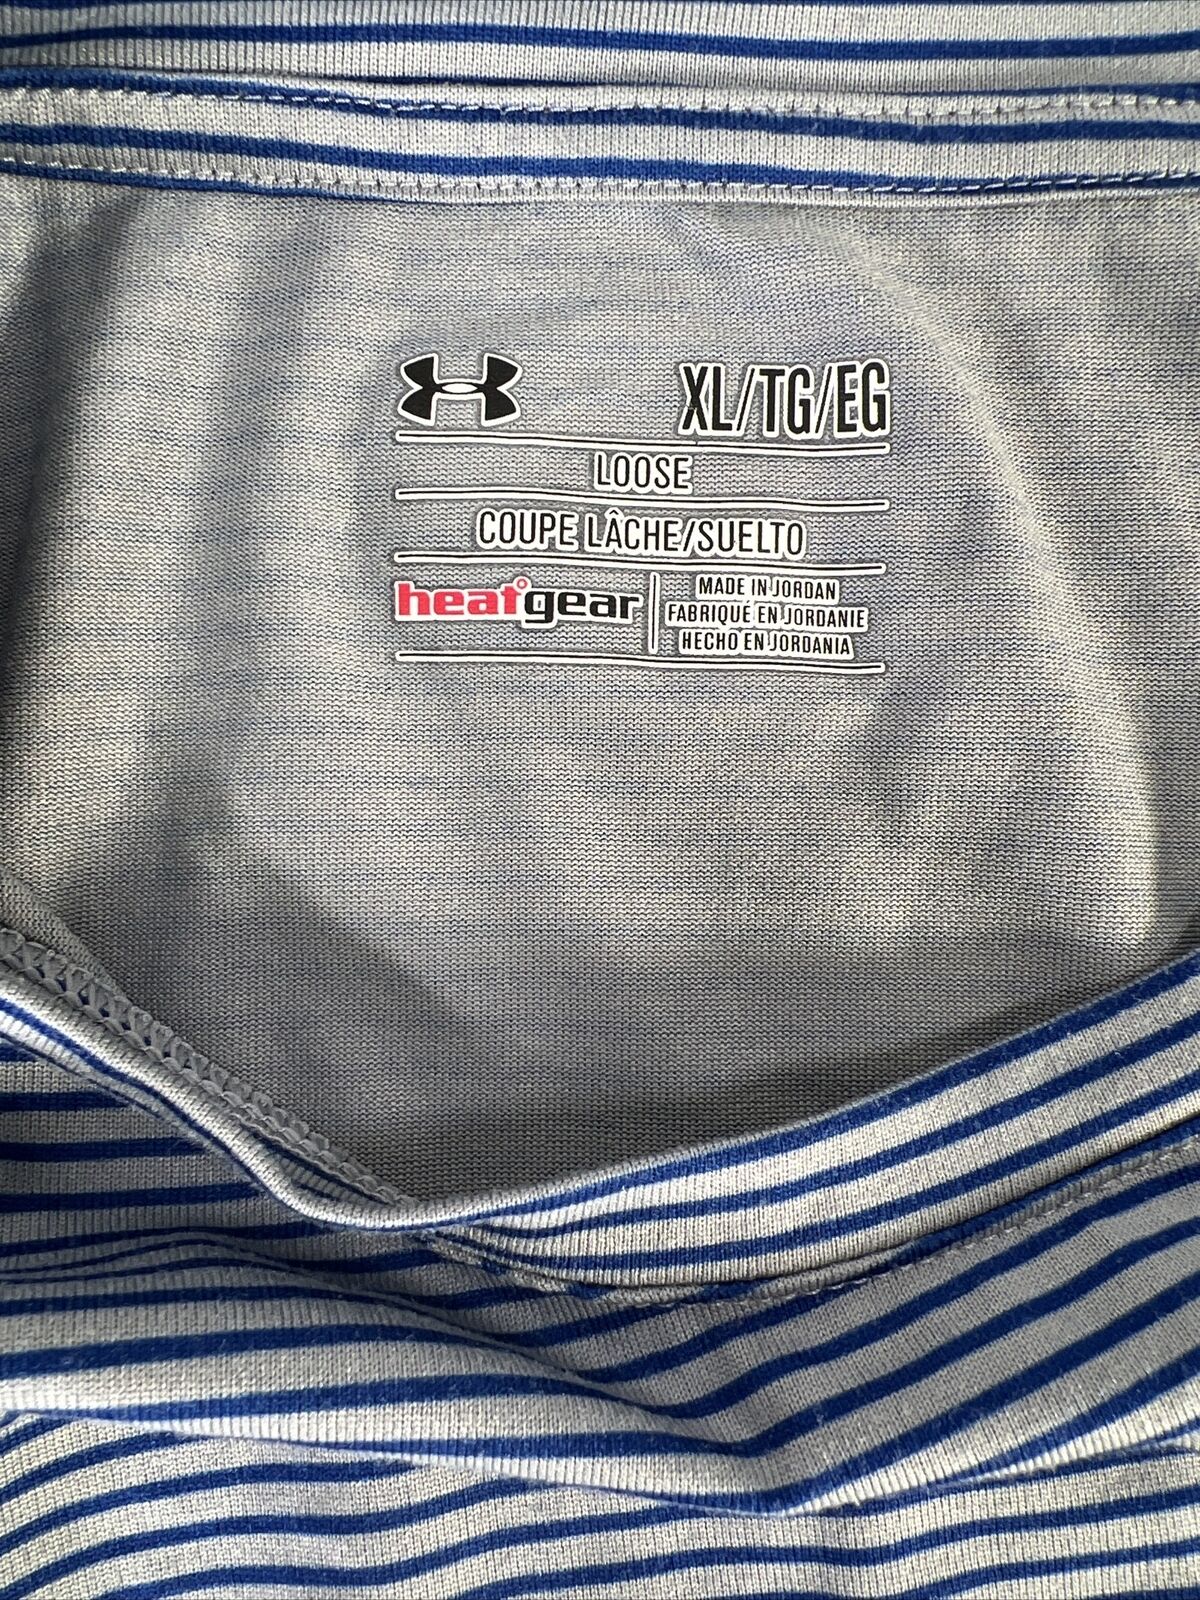 Under Armour Men's Gray/Blue Striped HeatGear Athletic Shirt - XL